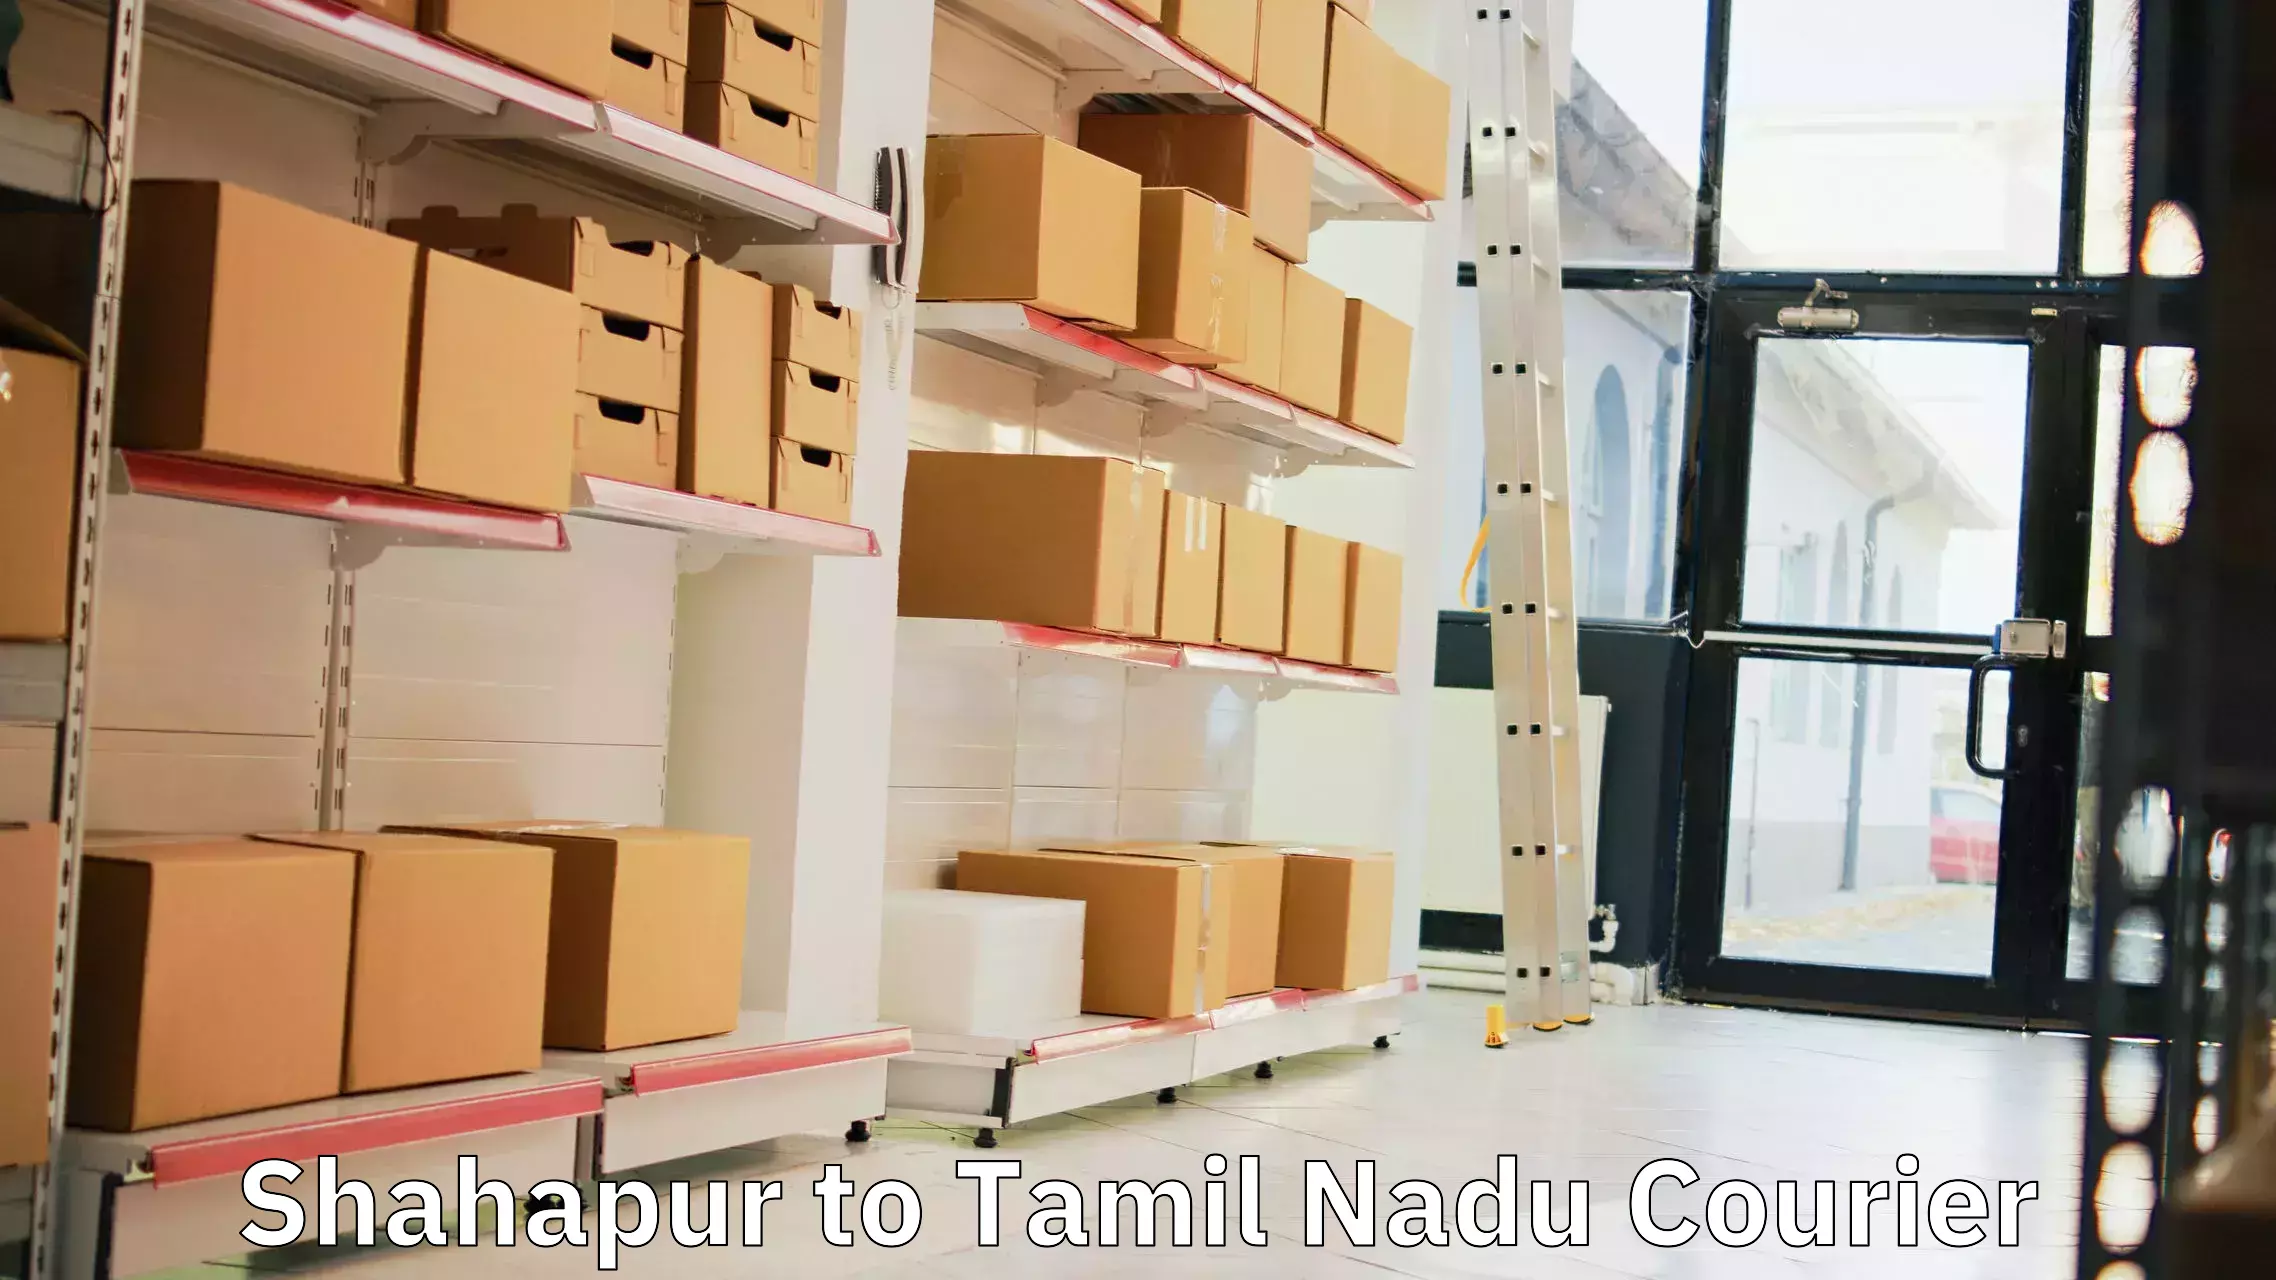 Courier service partnerships Shahapur to Tirupattur